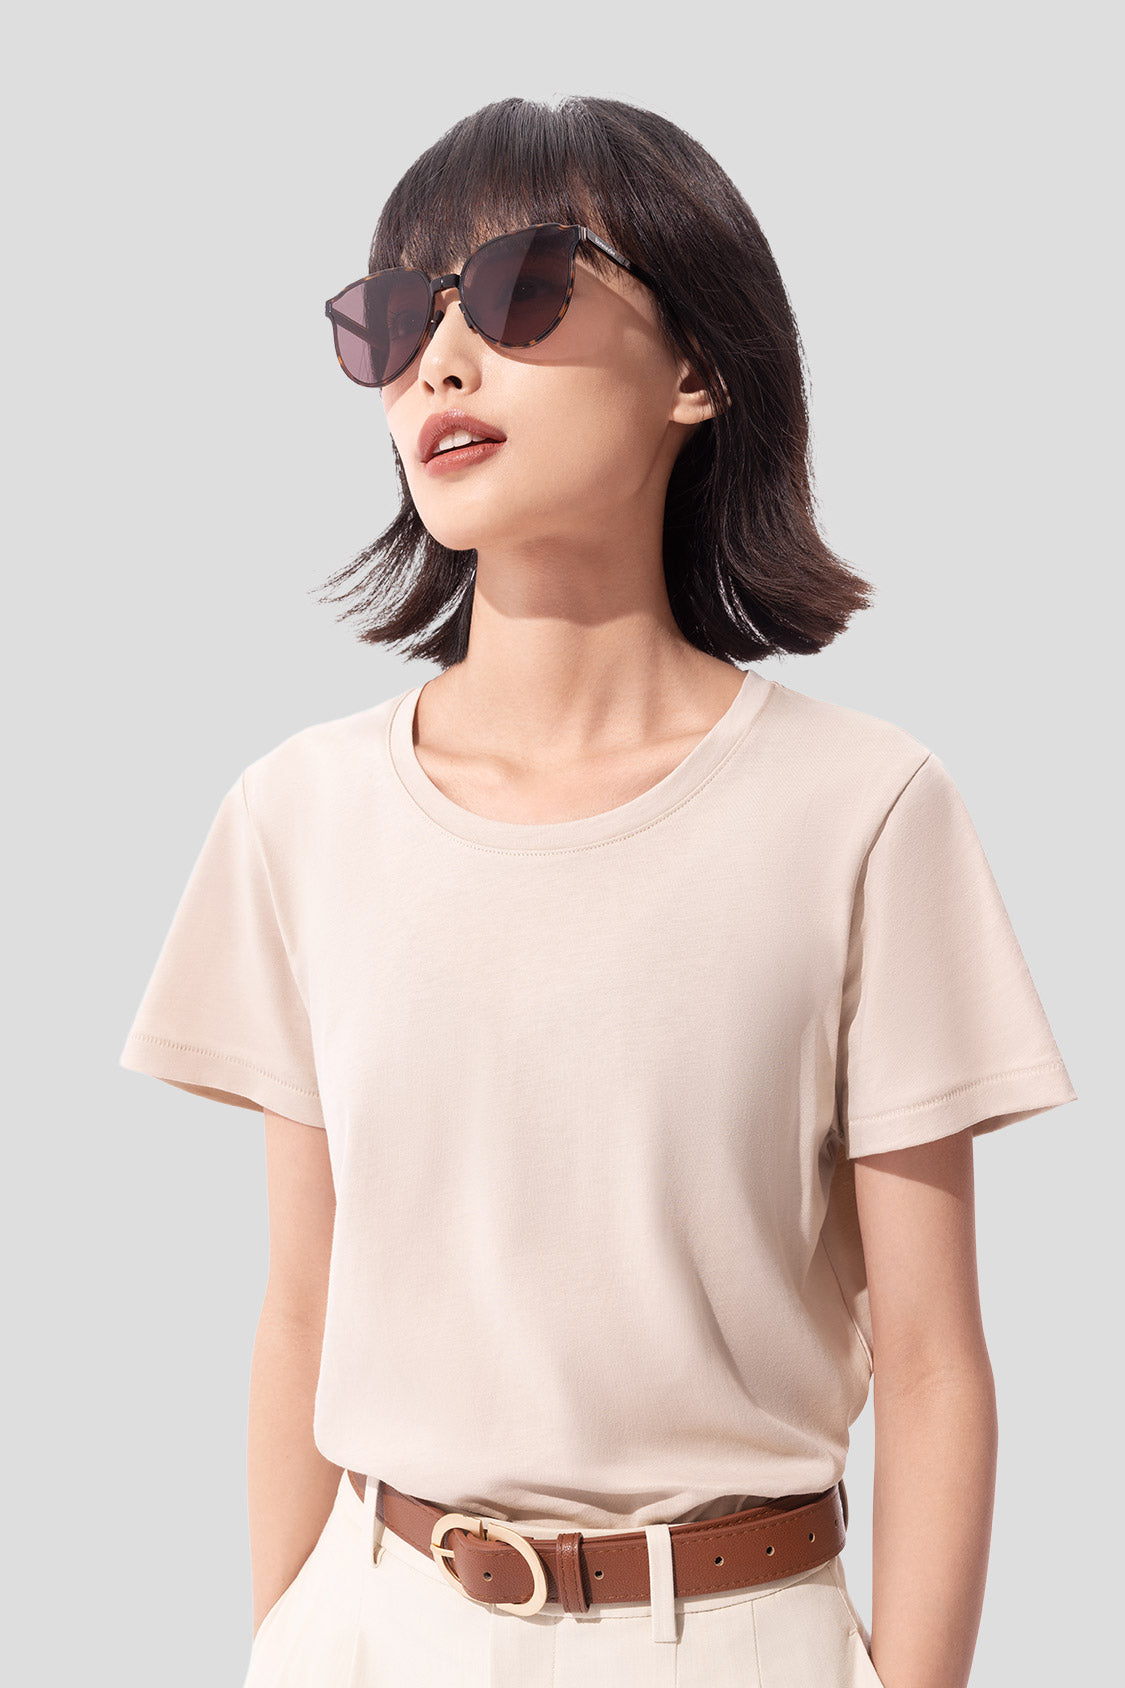 beneunder ultra-lightweight foldable sunglasses uv400 #color_starry black